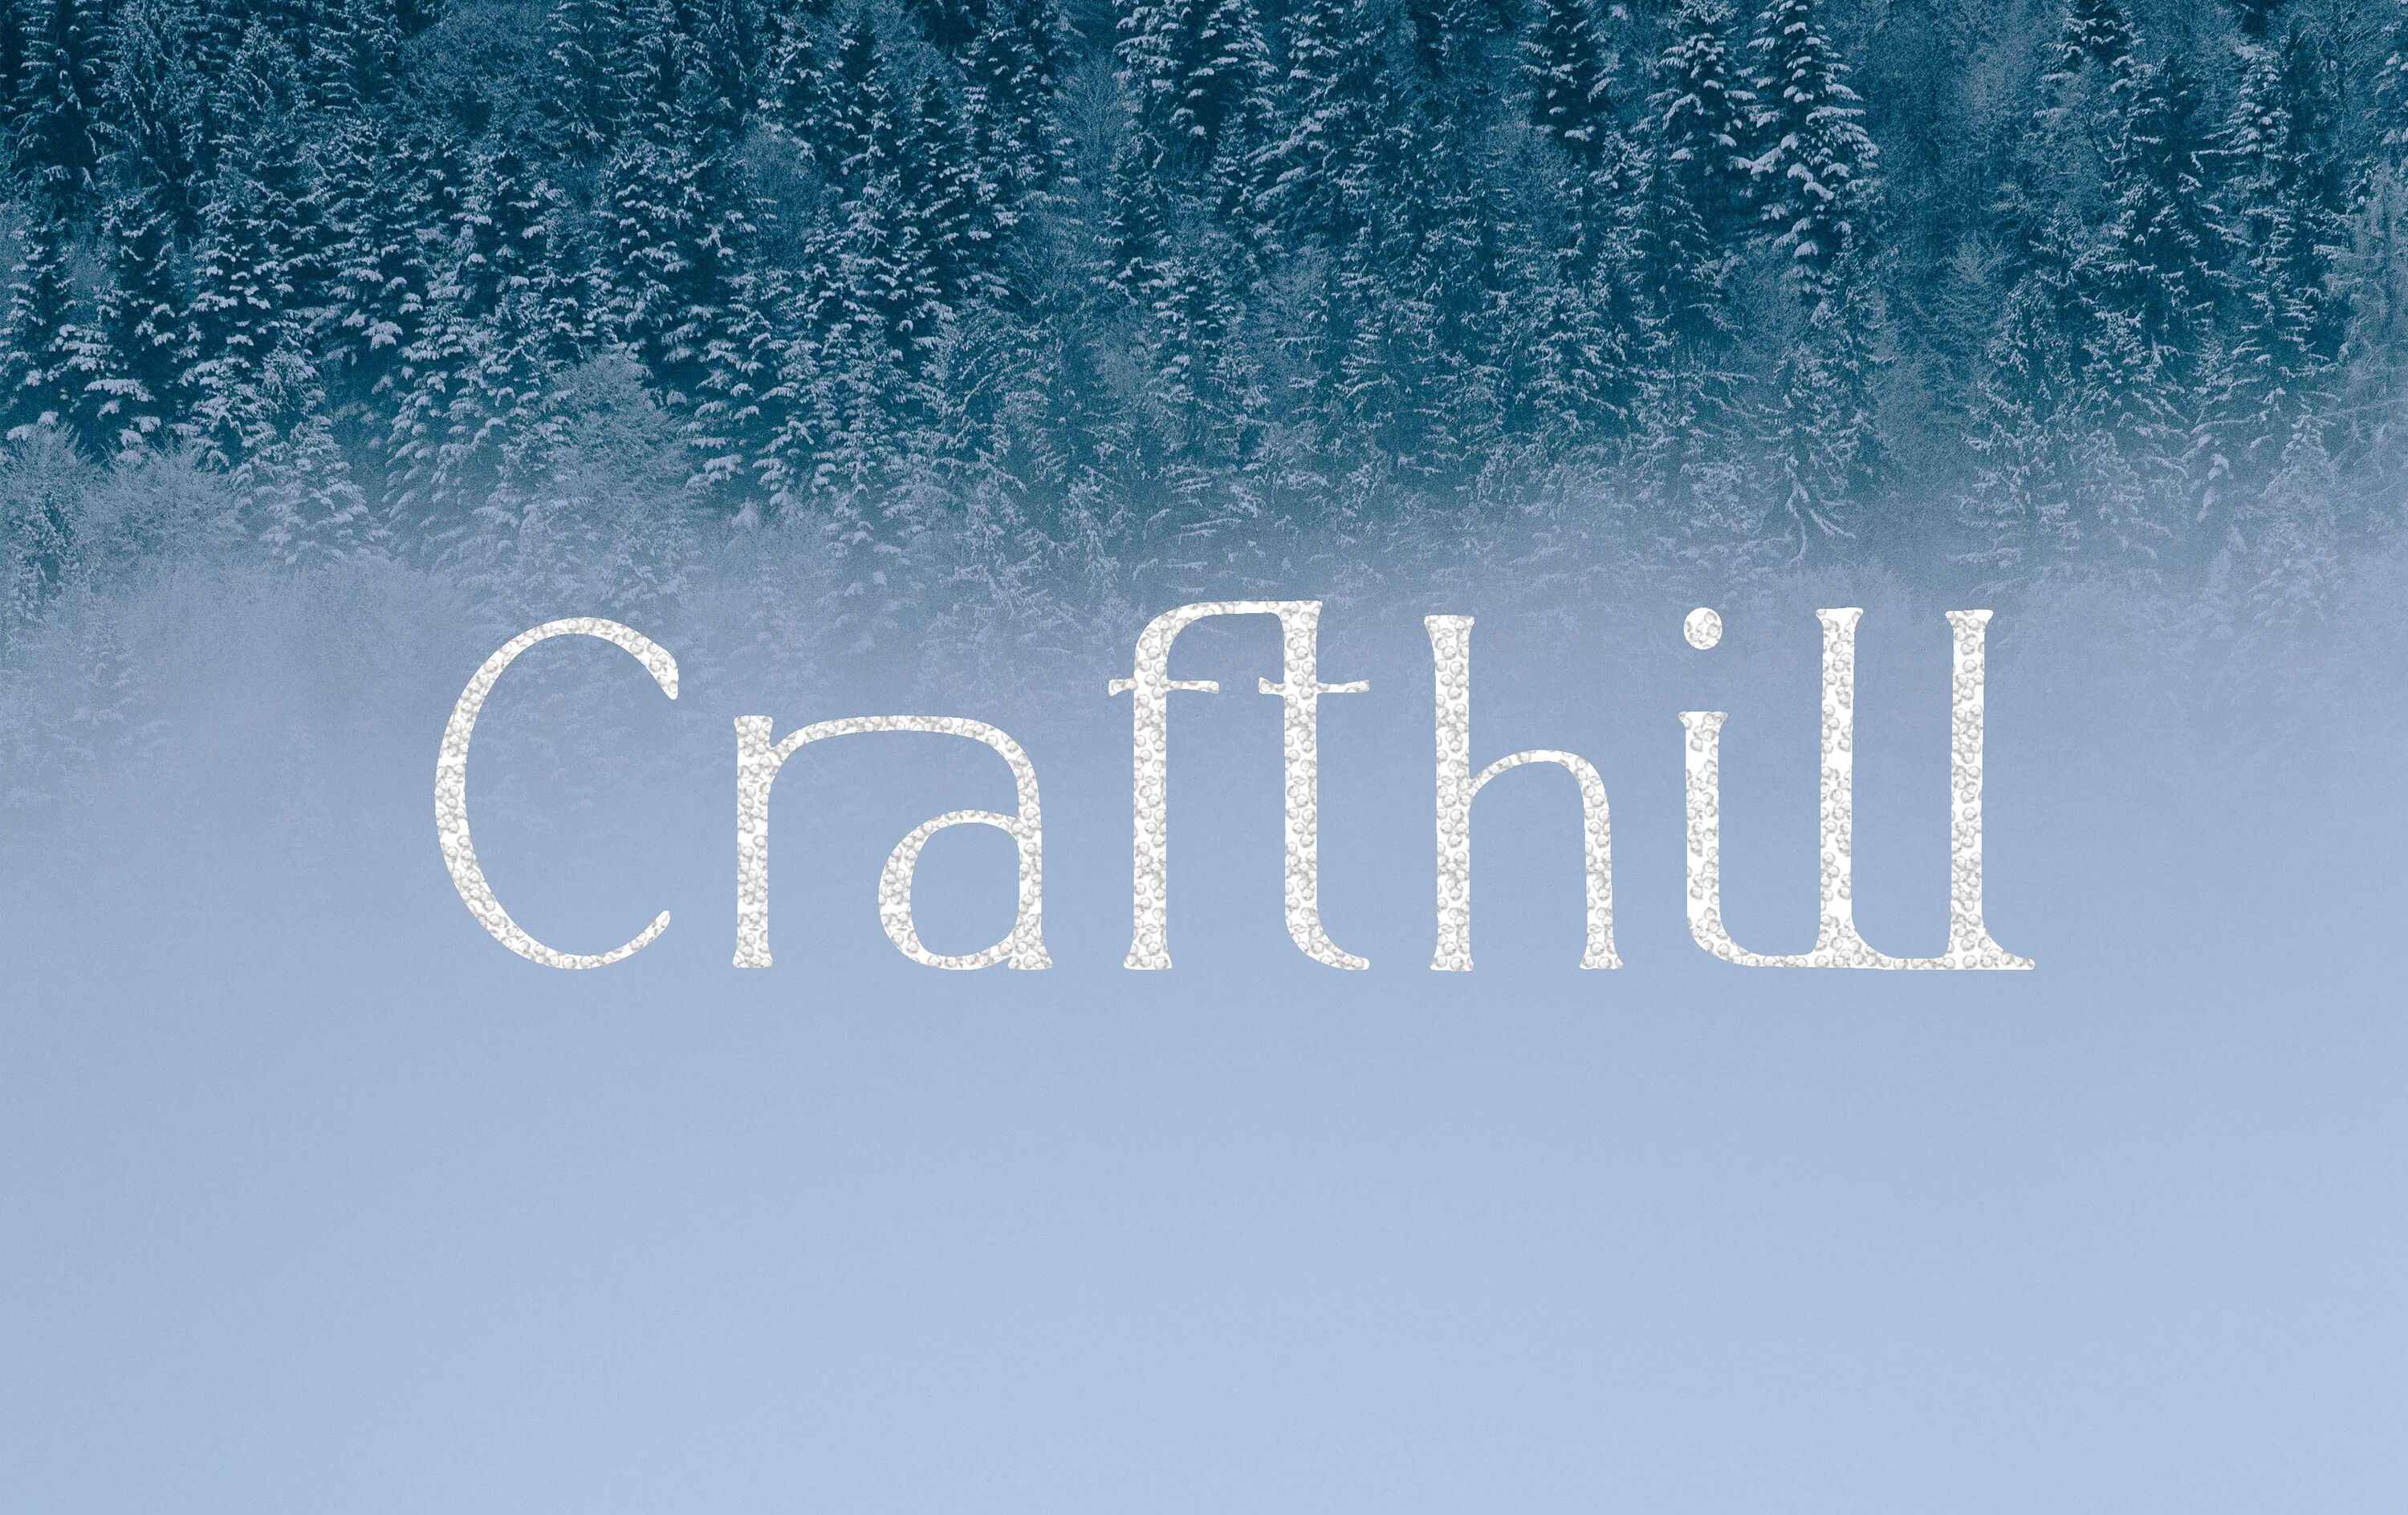 Crafthill Elegant Serif Font By Labfcreations Thehungryjpeg Com